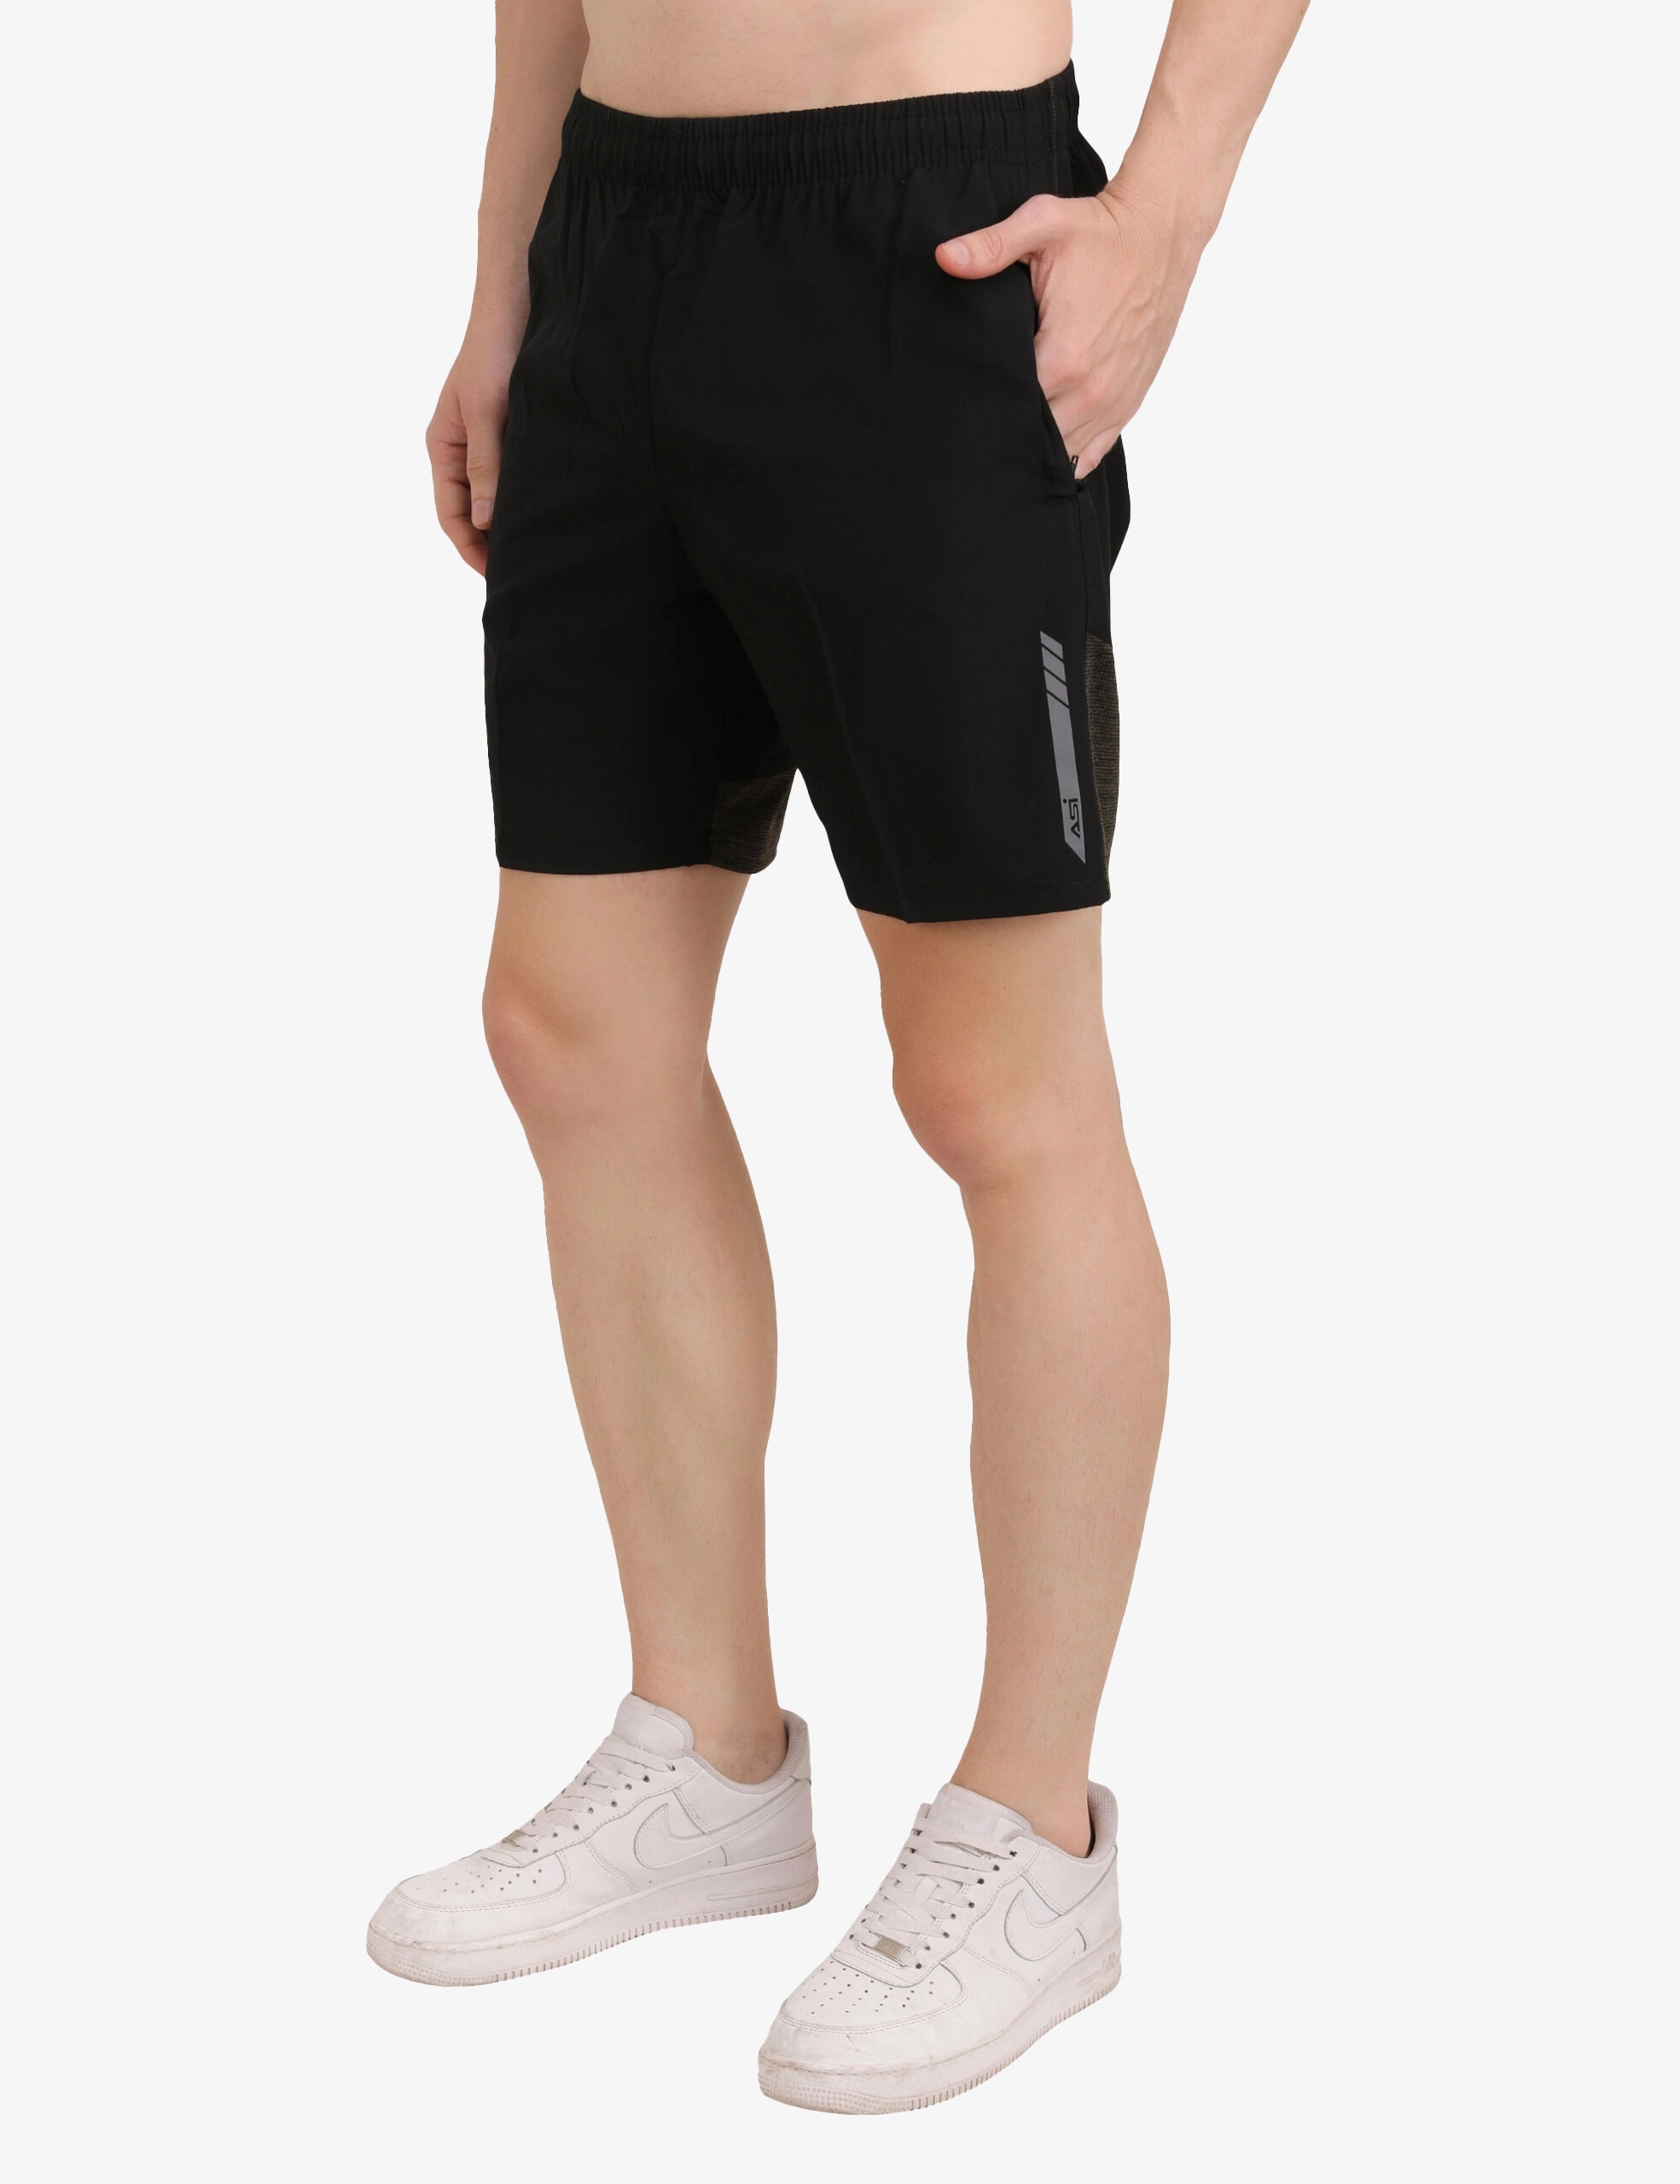 ASI Shorts Mint Black Color